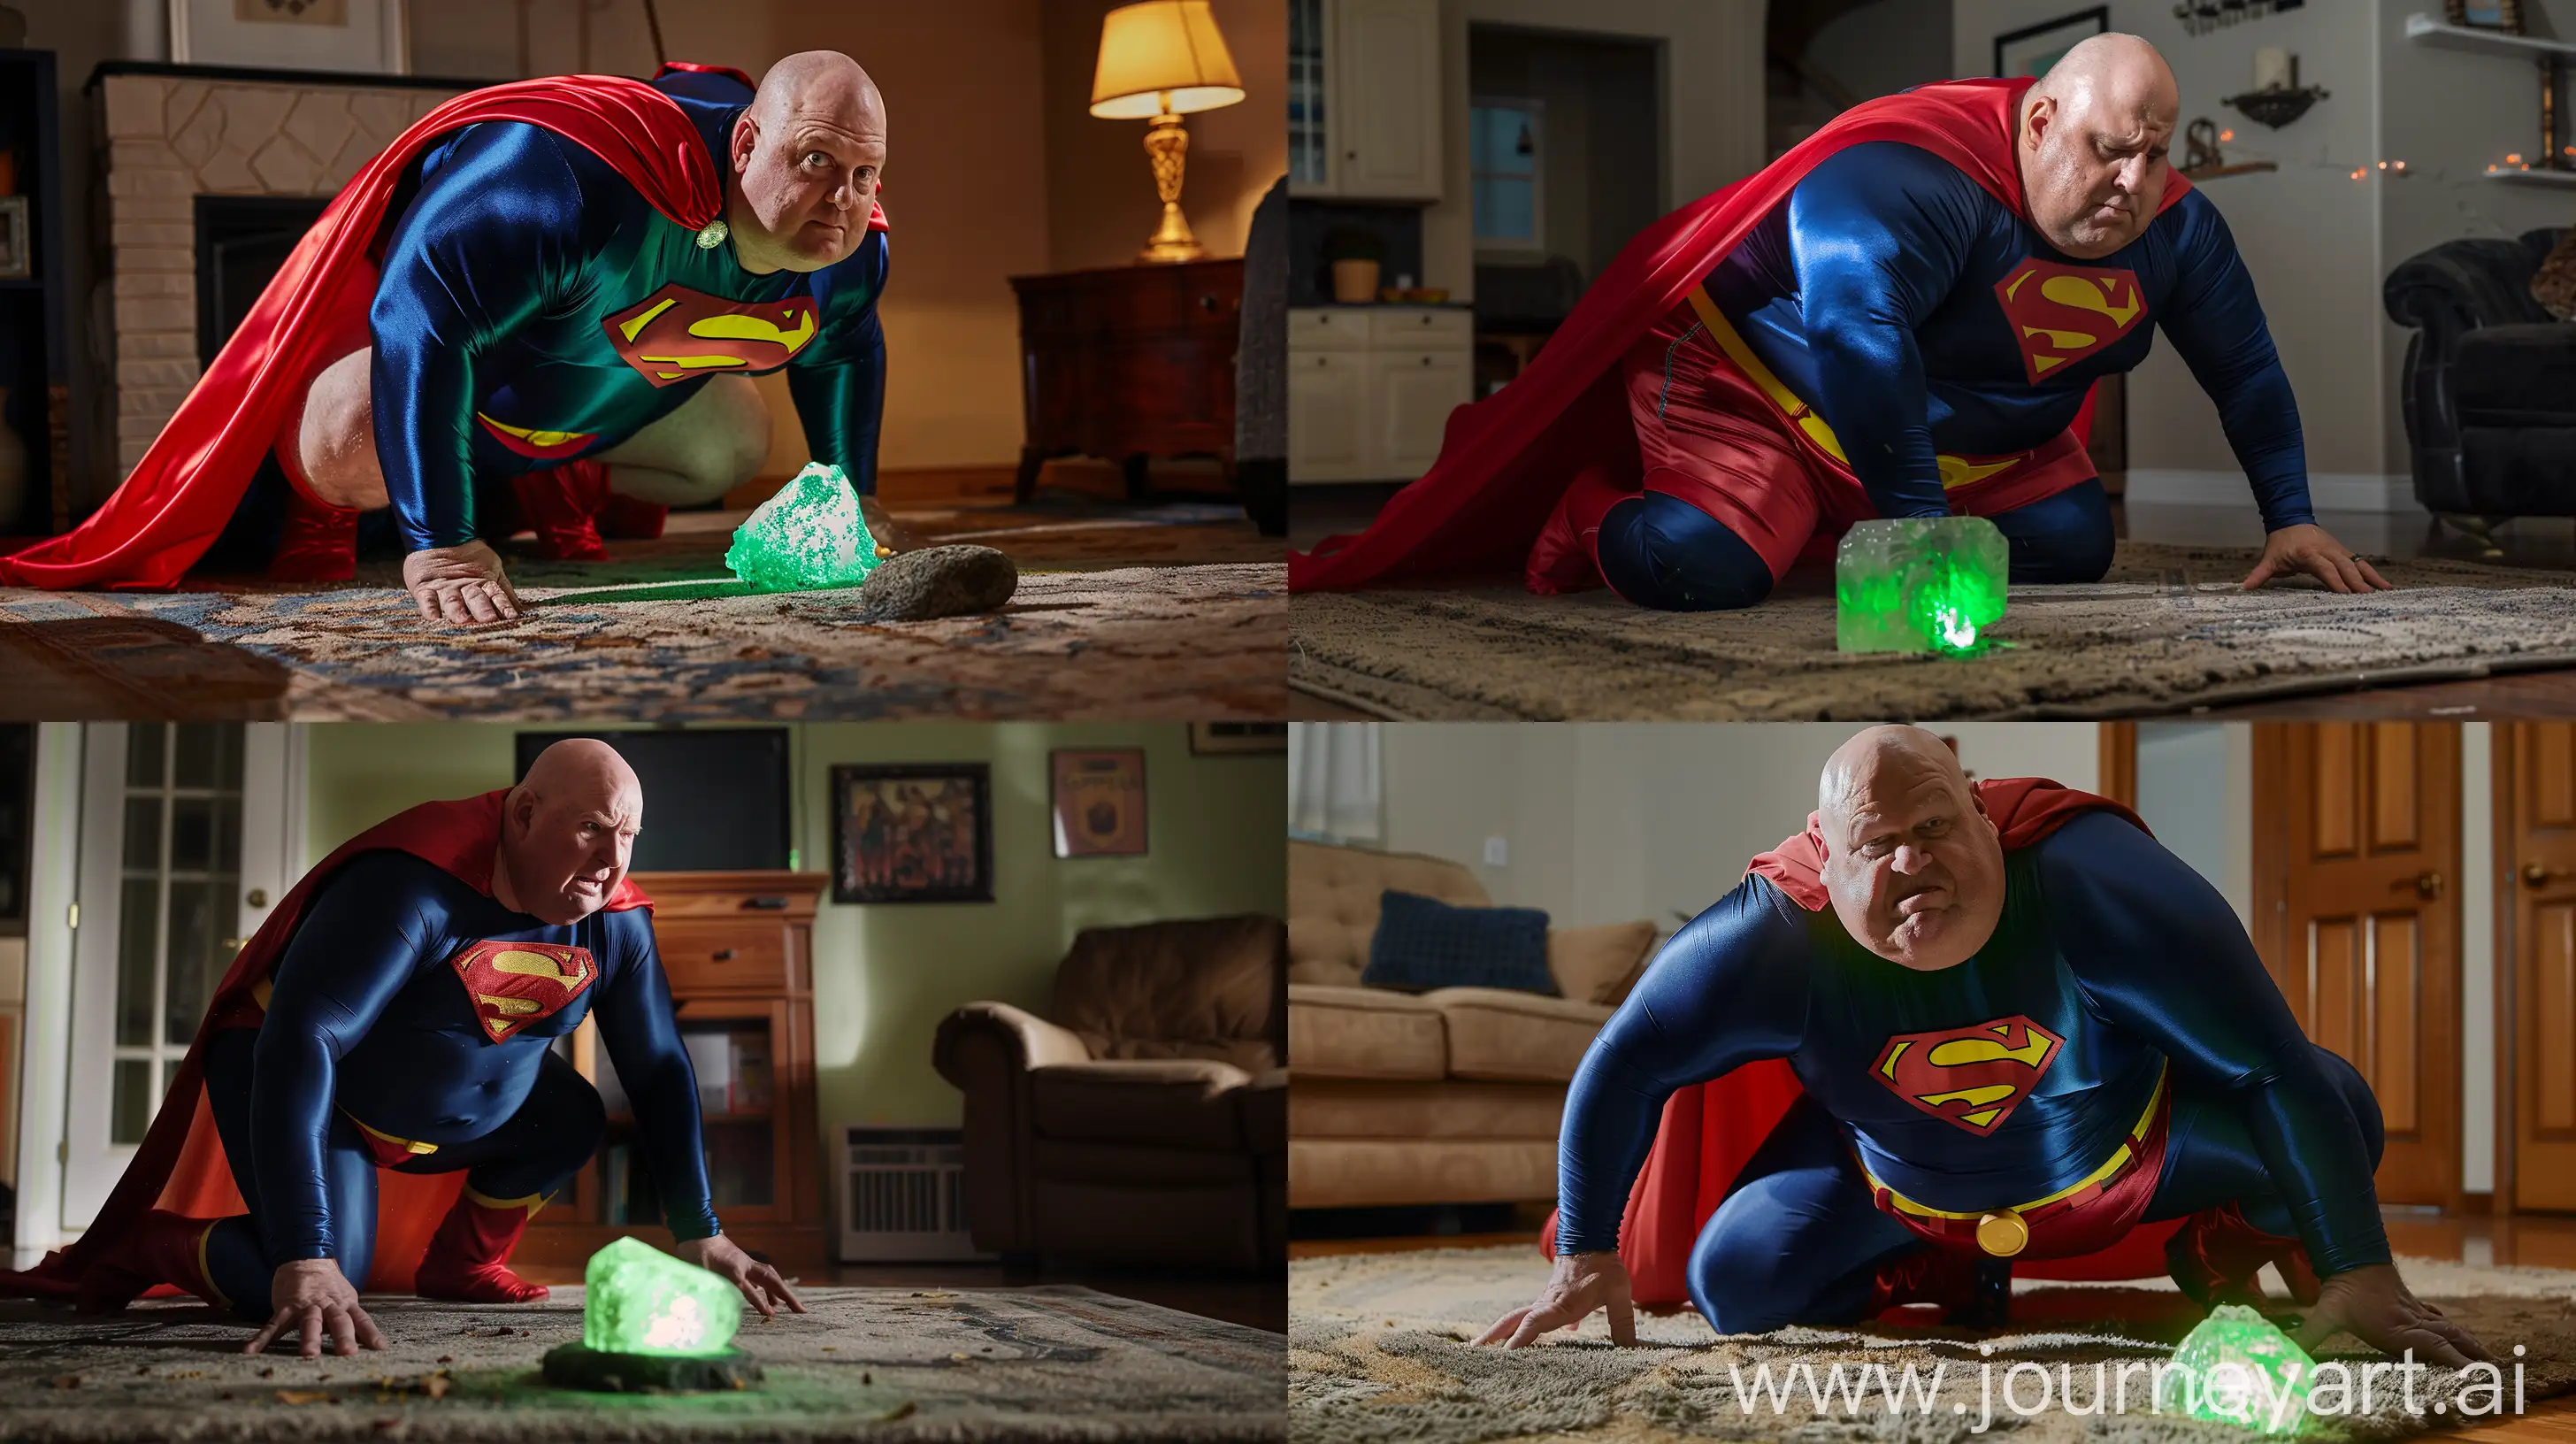 Senior-Gentleman-as-Superman-in-CloseUp-with-Green-Mystic-Orb